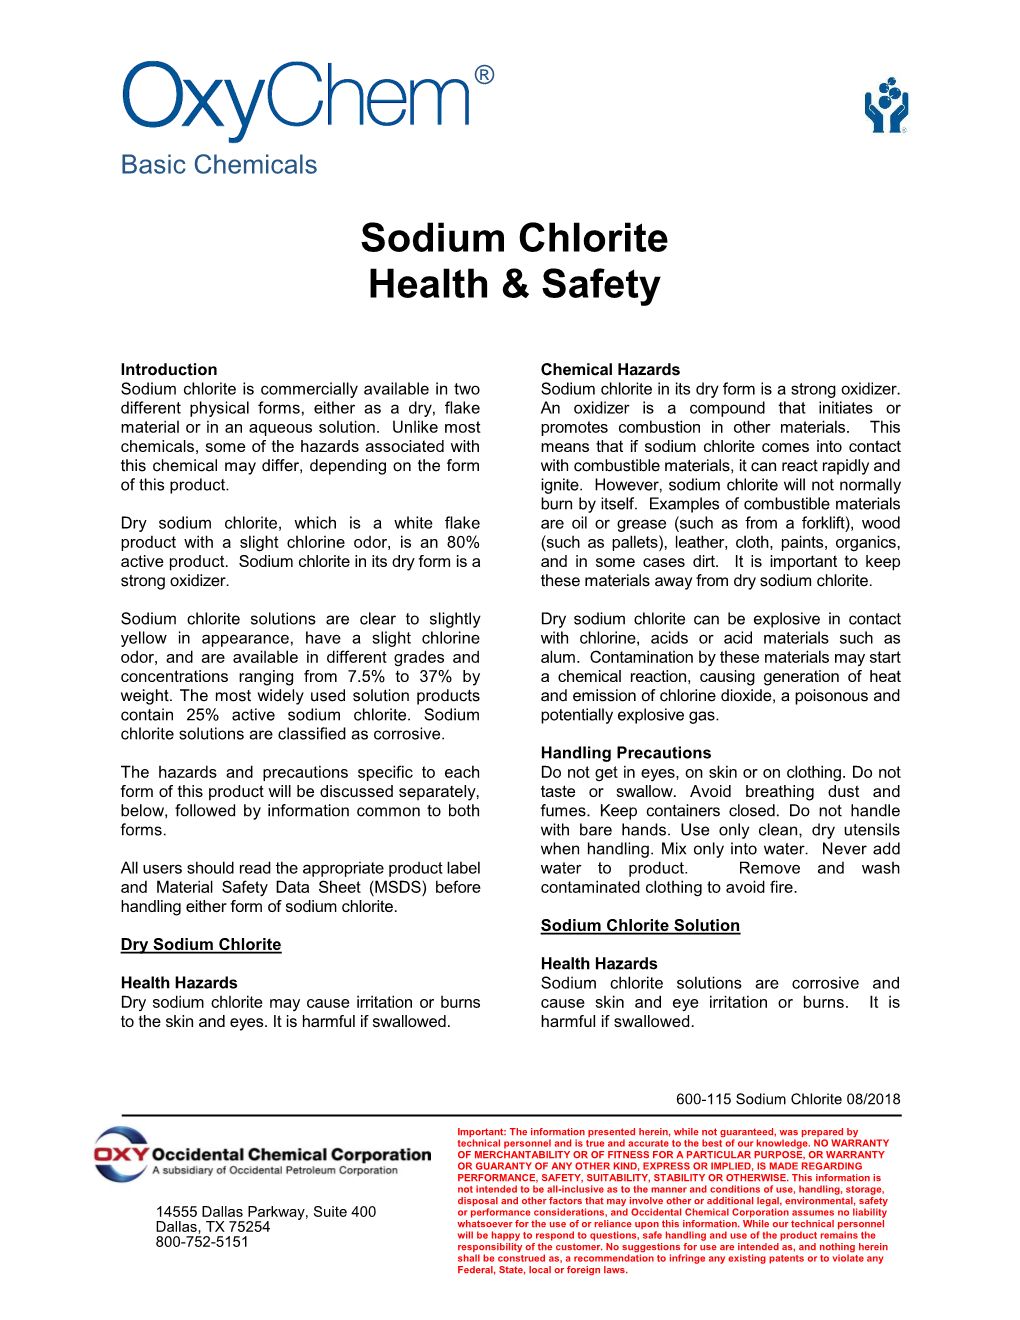 Sodium Chlorite Health & Safety